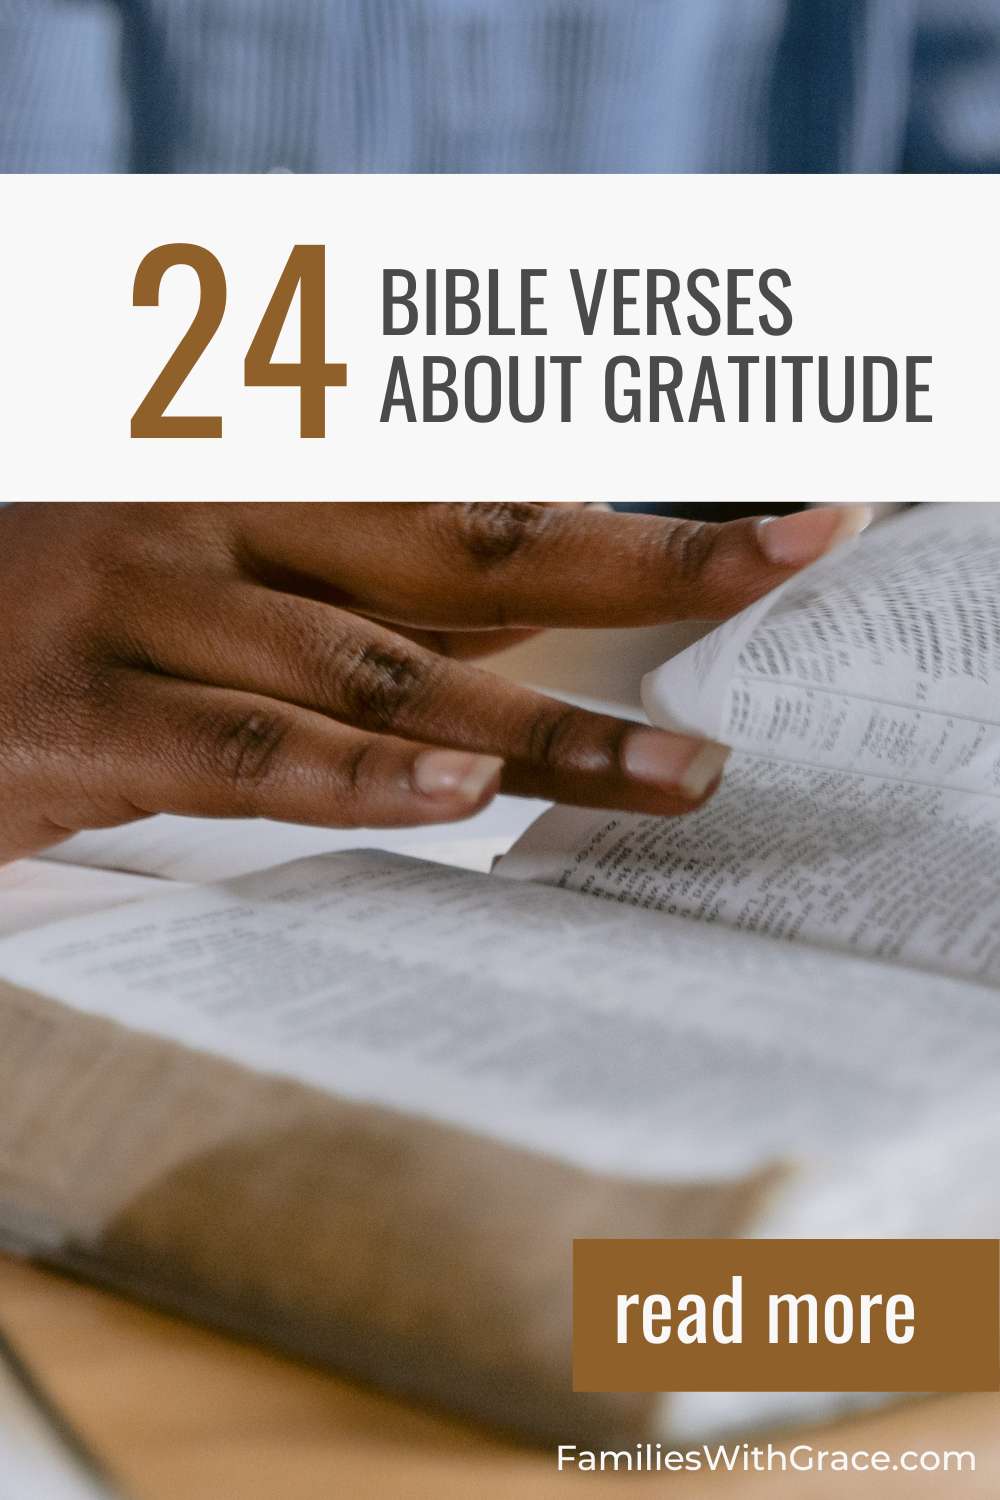 Bible verses about gratitude